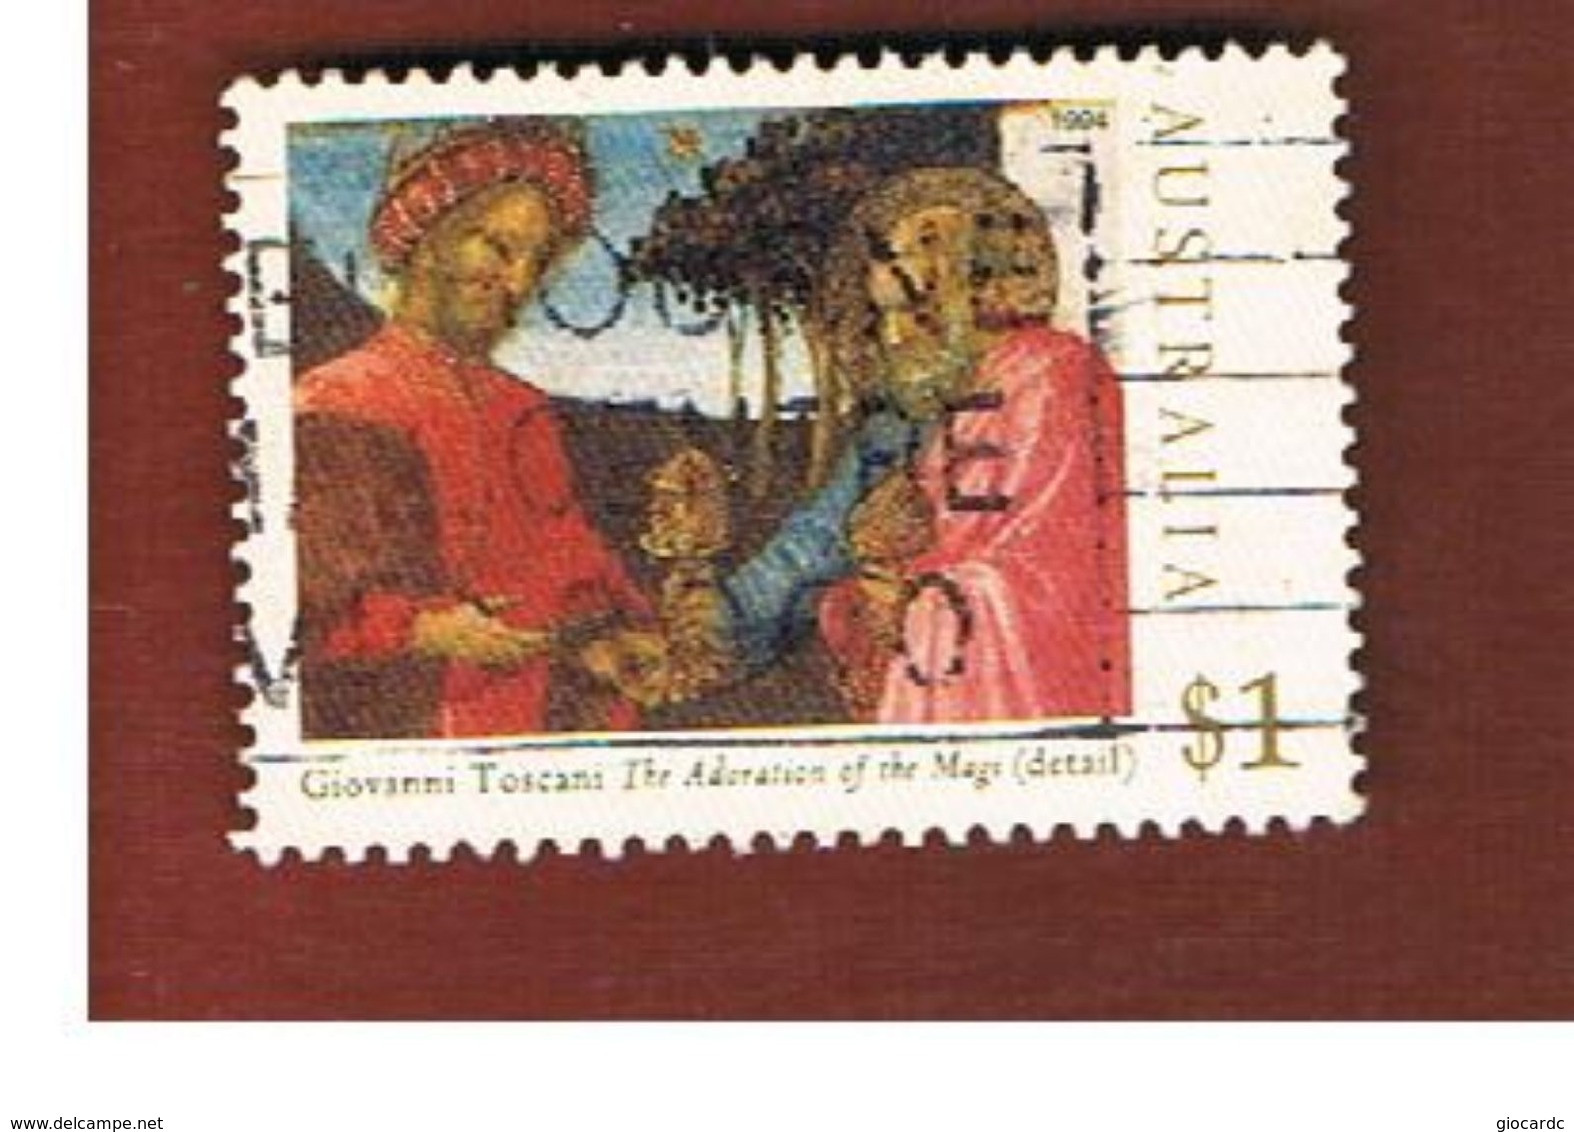 AUSTRALIA  -  SG 1489  -      1994  CHRISTMAS       -       USED - Used Stamps